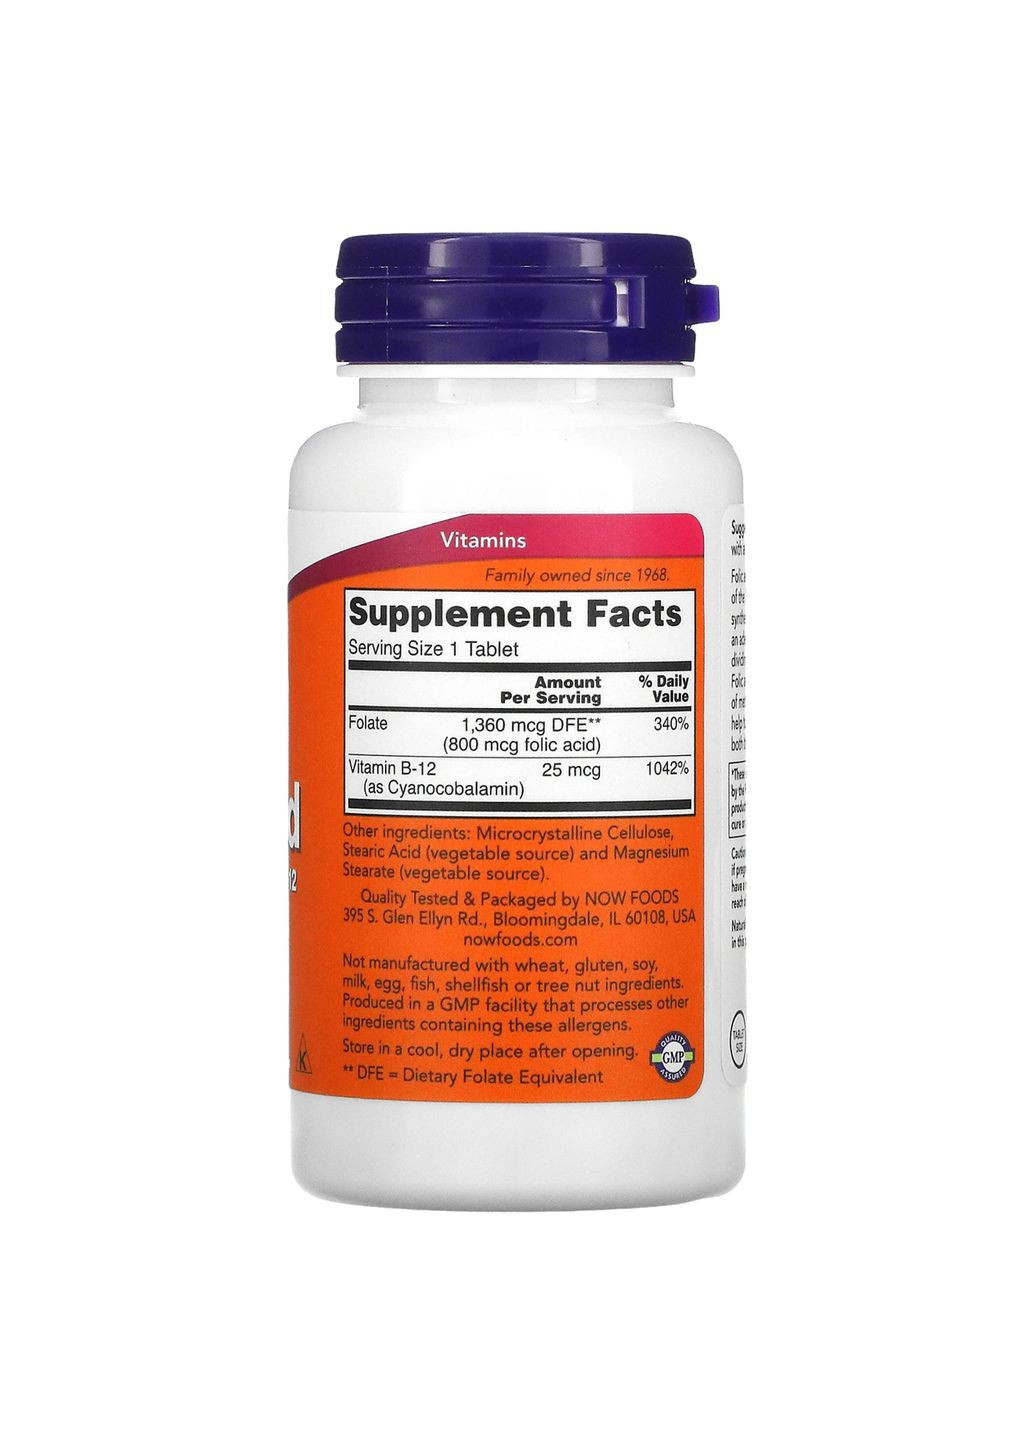 Фолиевая кислота 800 мкг с витамином Б12 Folic Acid with Vitamin B12 250 таблеток Now Foods (264648117)